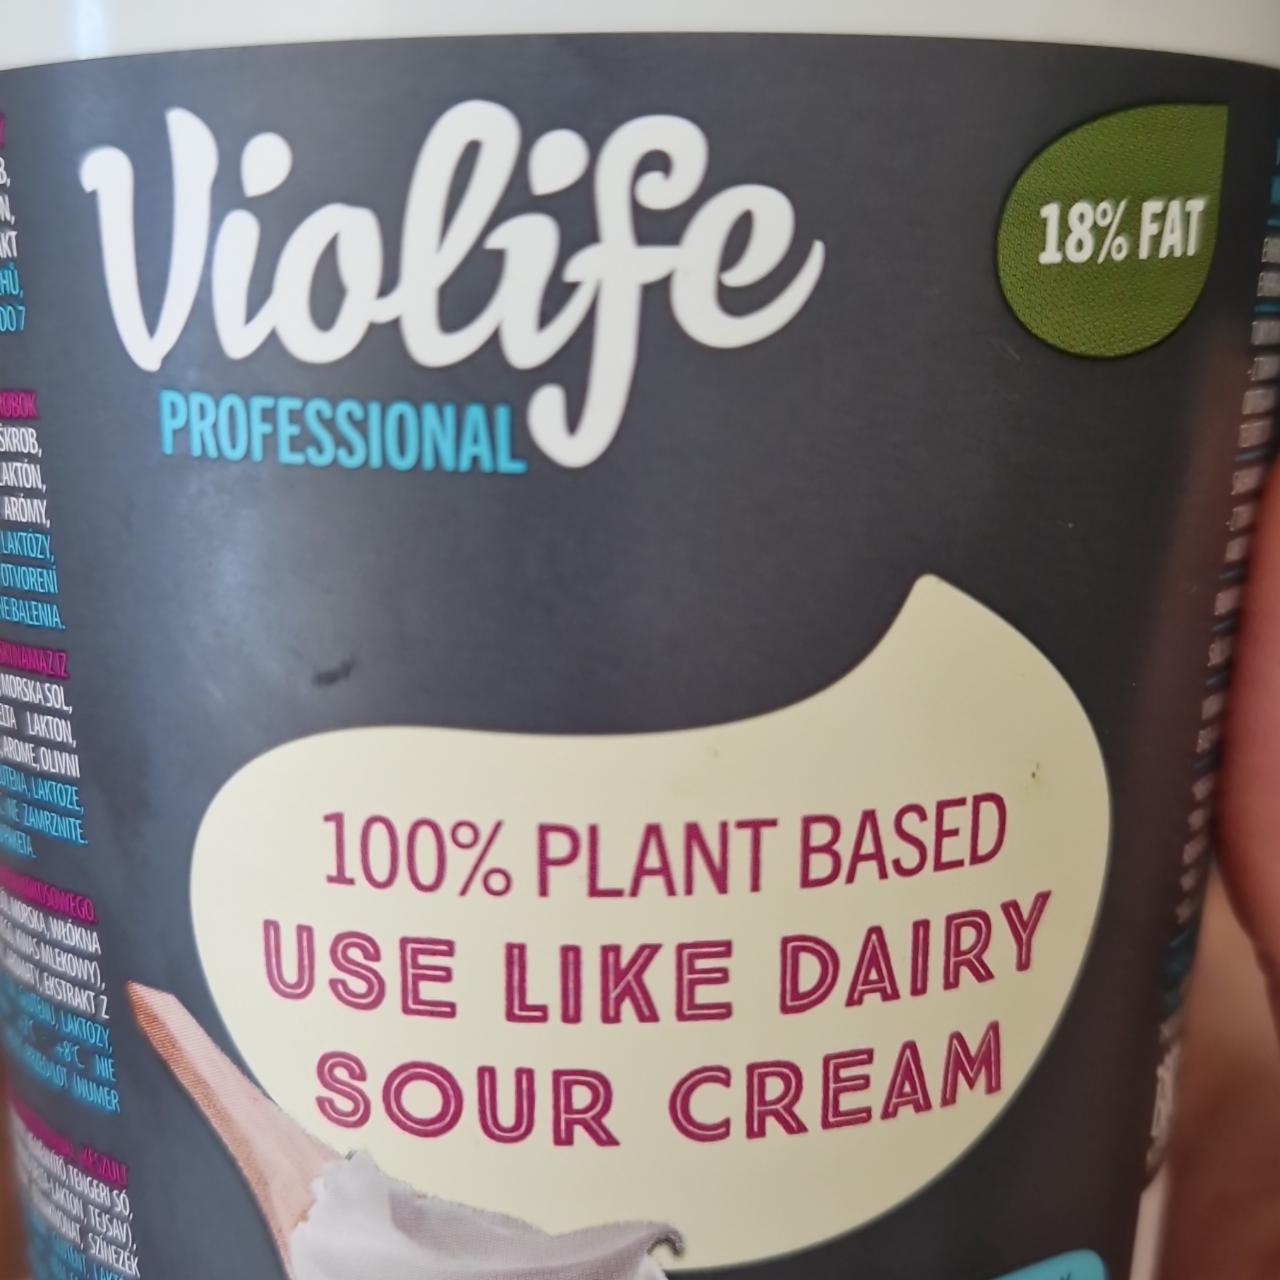 Fotografie - 100% Plant base use like dairy Sour cream 18% fat Violife